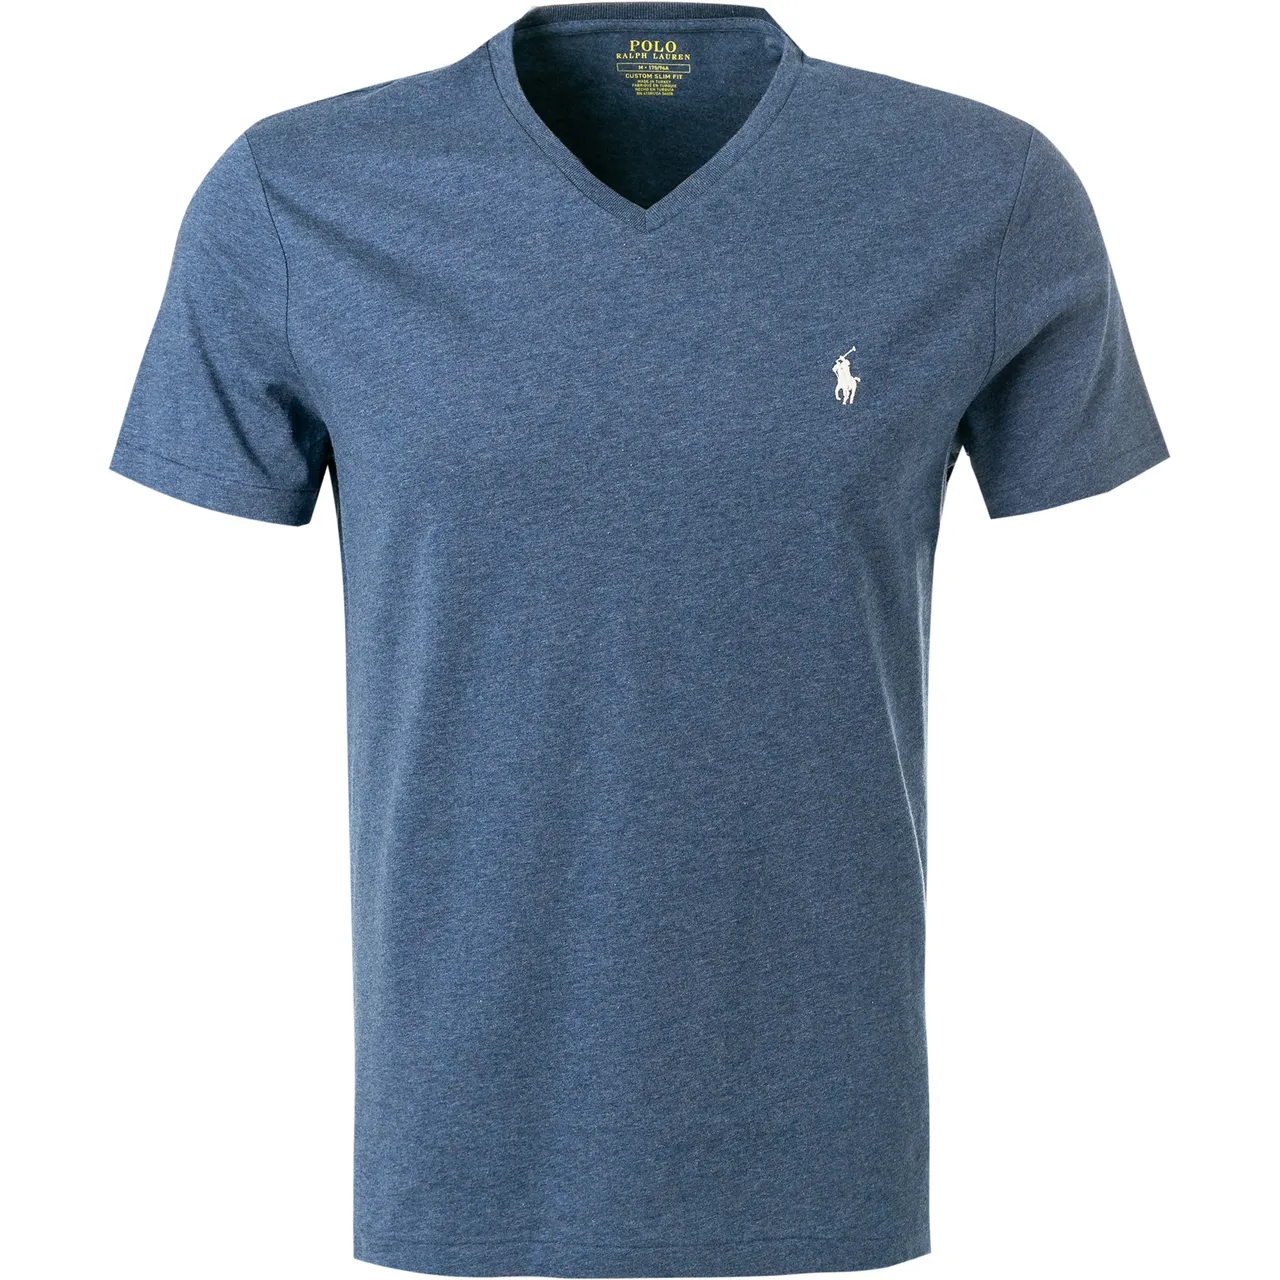 Polo Ralph Lauren Herren T-Shirt blau Baumwolle meliert Slim Fit